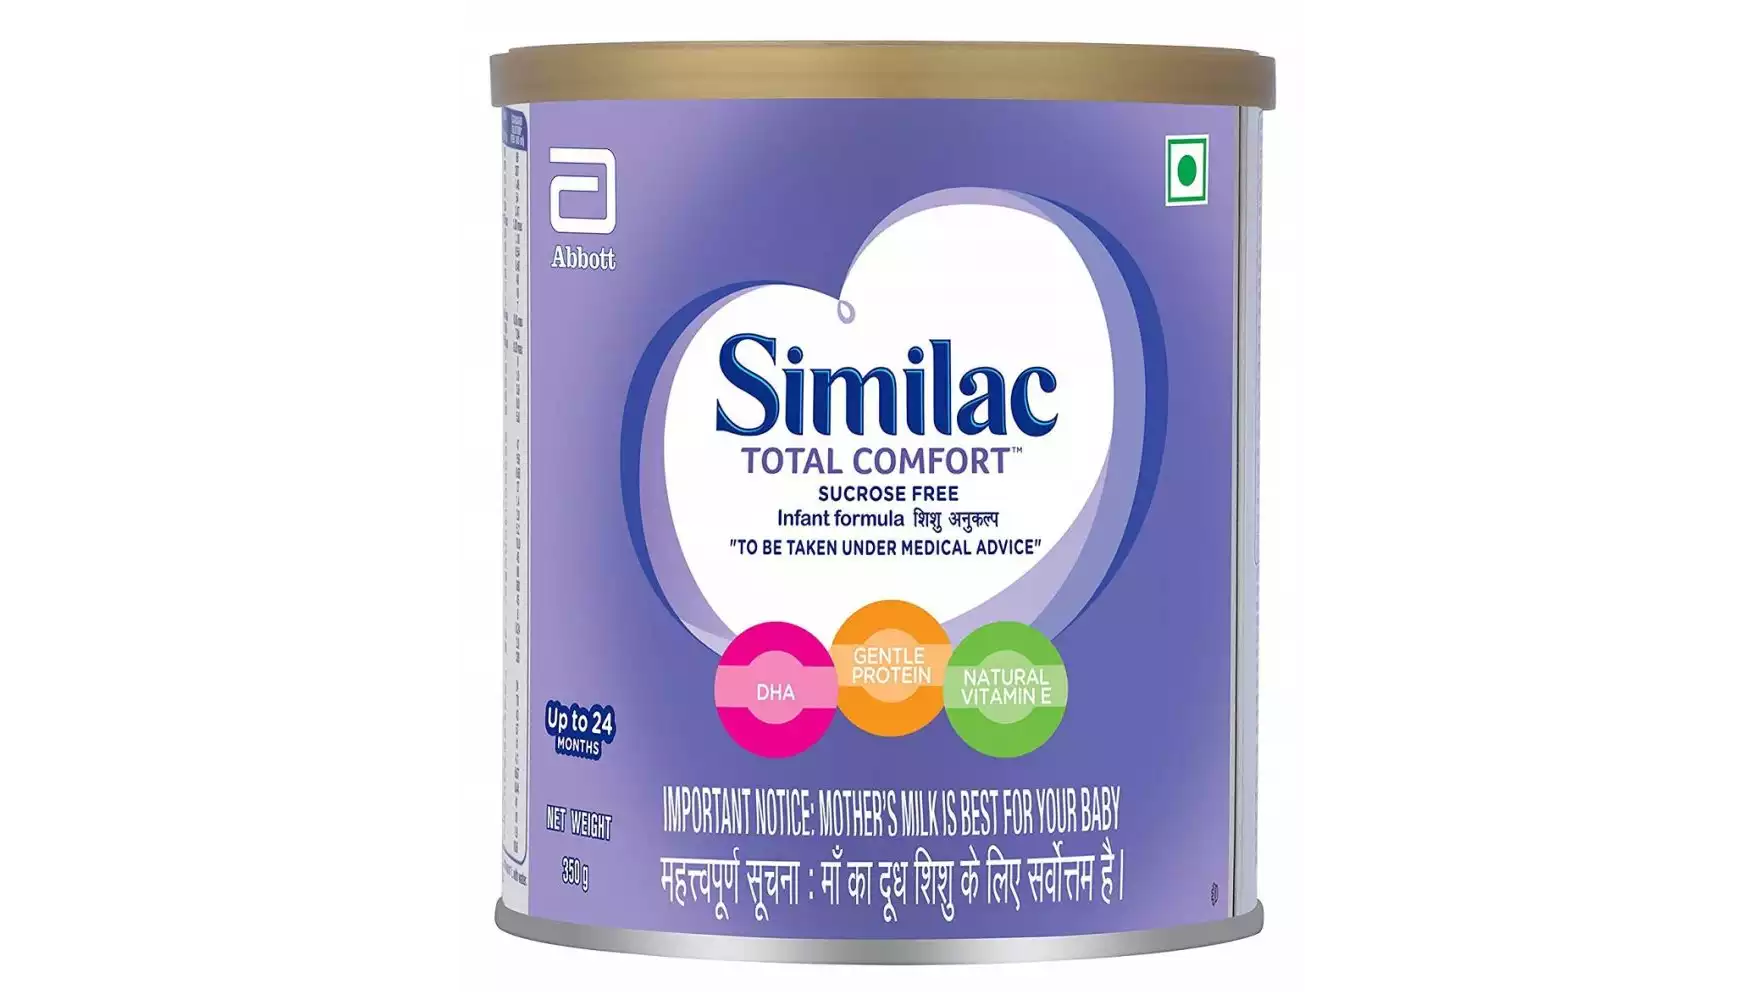 Abbott Similac Total Comfort Infant Formula (350g)